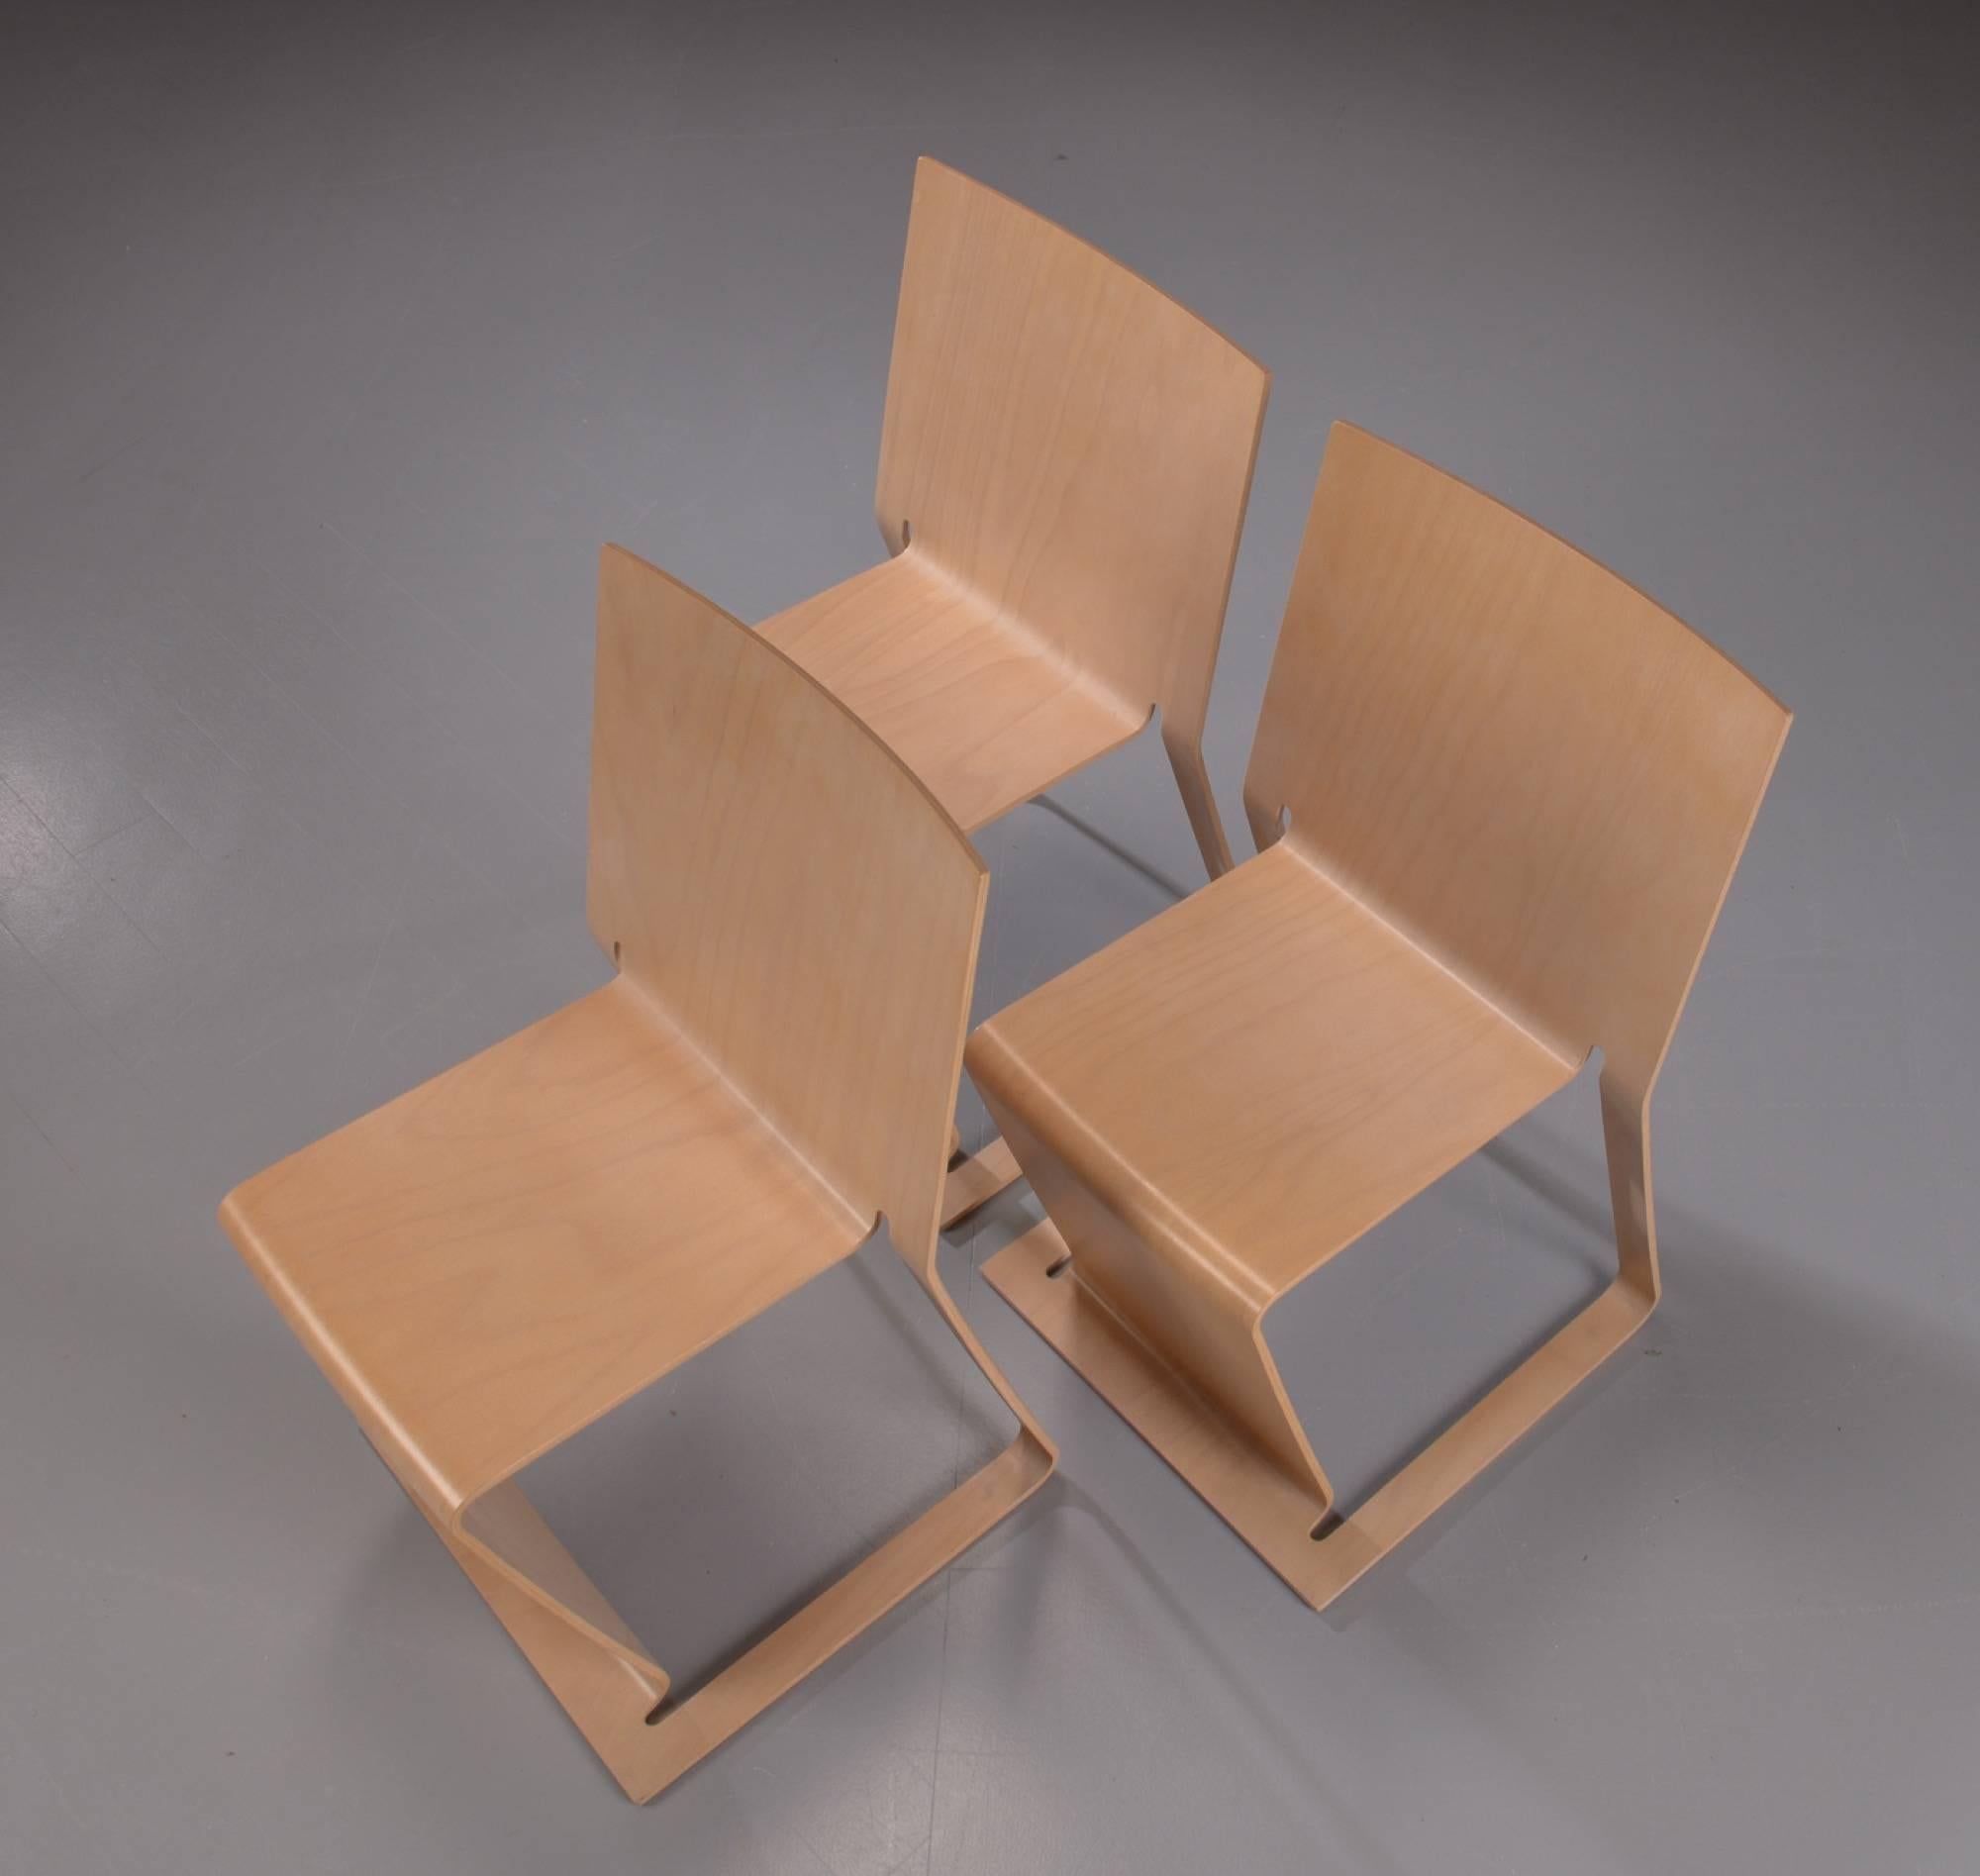 Three stacked Swedish lForm chairs
Swedish Iform, three stacked chairs in shaped and lacquered beech fins.